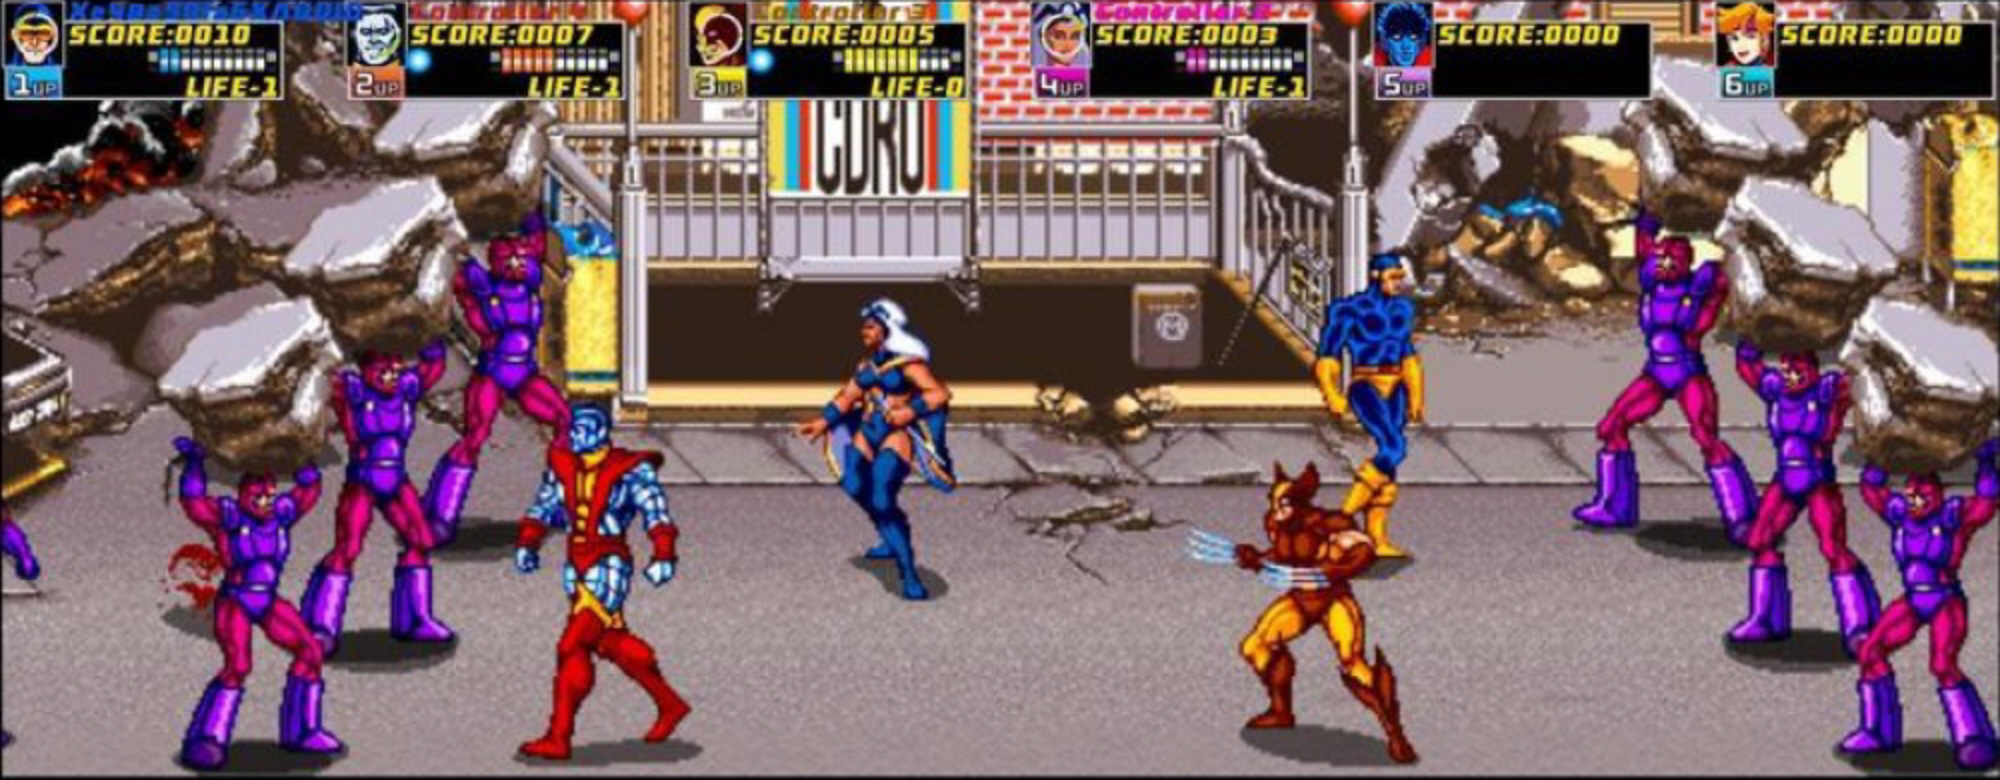 x-men-arcade-game-xbox-live-arcade-playstation-network-screenshot.jpg